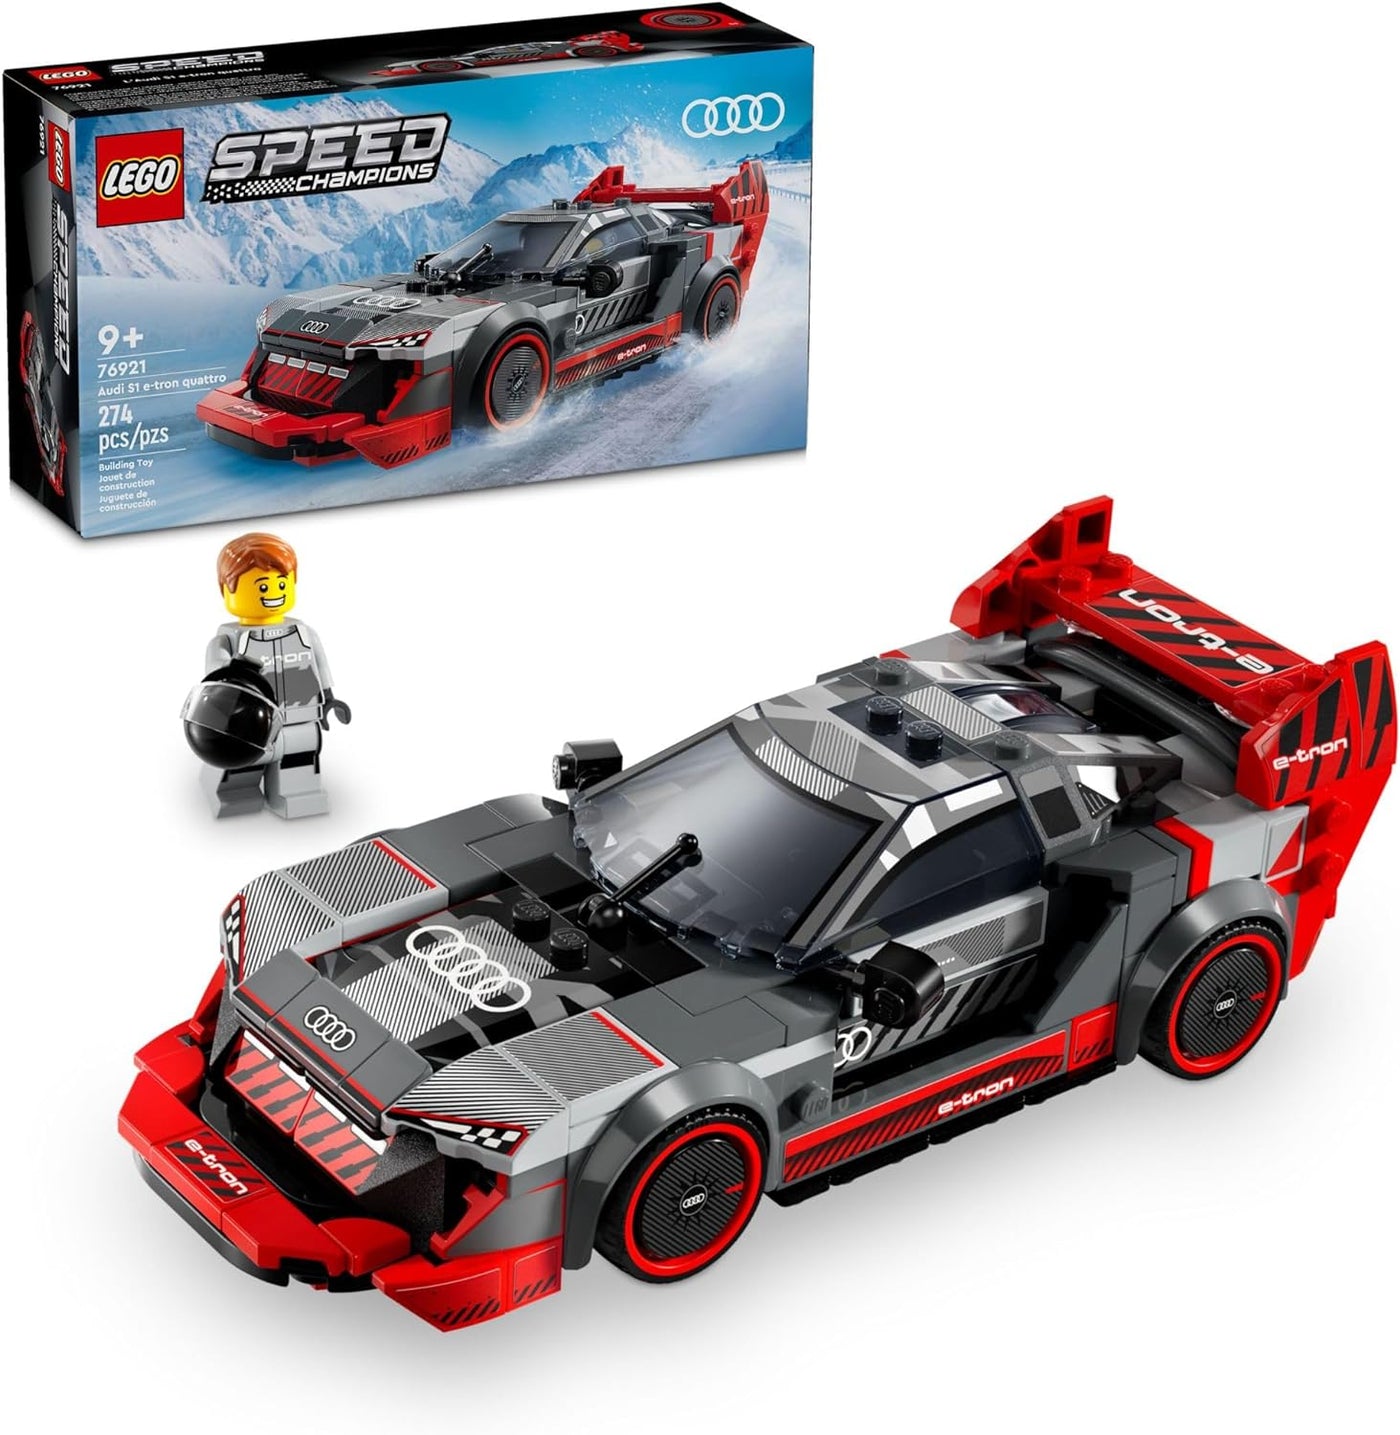 LEGO 76921 Audi S1 e-tron quattro Race Car